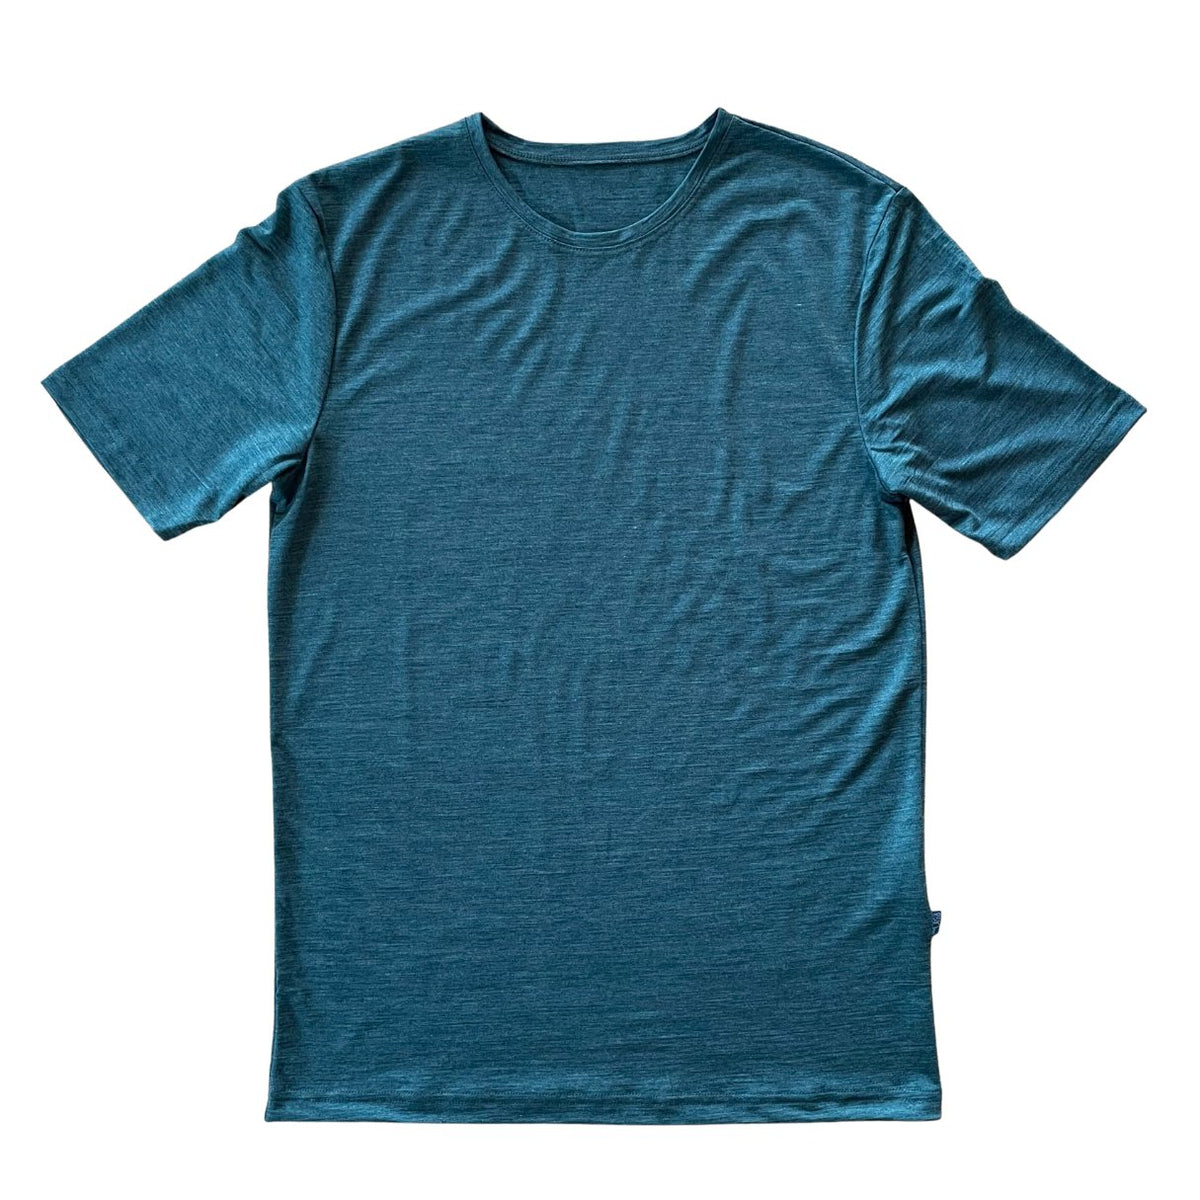 T-Shirt Herren schiefer, Merinowolle & Tencel (bio, bluesign) - Glückskind - T-Shirt - S